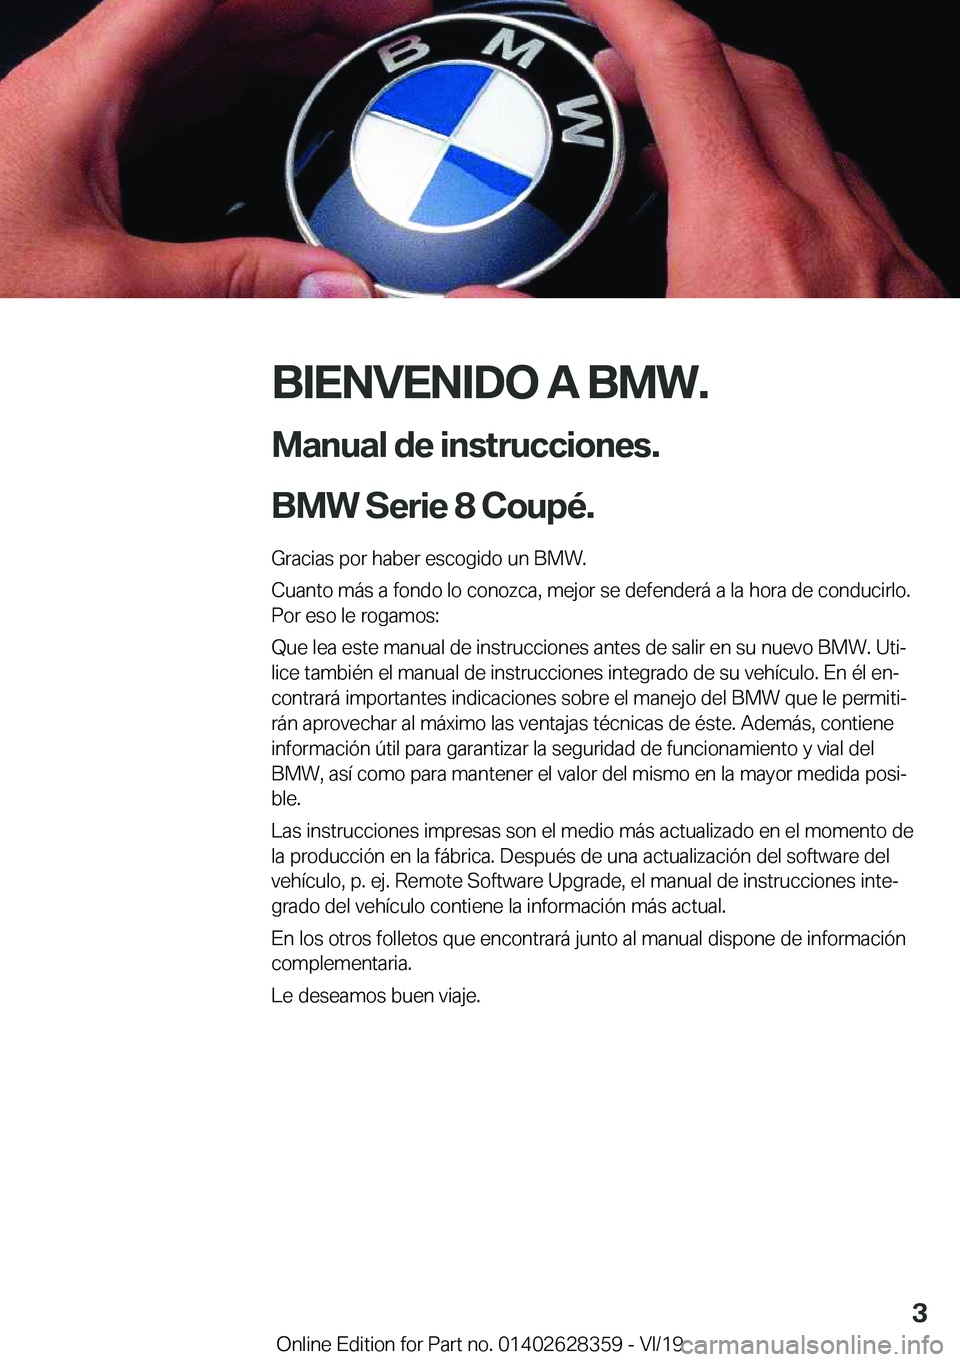 BMW 8 SERIES COUPE 2020  Manuales de Empleo (in Spanish) �B�I�E�N�V�E�N�I�D�O��A��B�M�W�.
�M�a�n�u�a�l��d�e��i�n�s�t�r�u�c�c�i�o�n�e�s�.
�B�M�W��S�e�r�i�e��8��C�o�u�p�